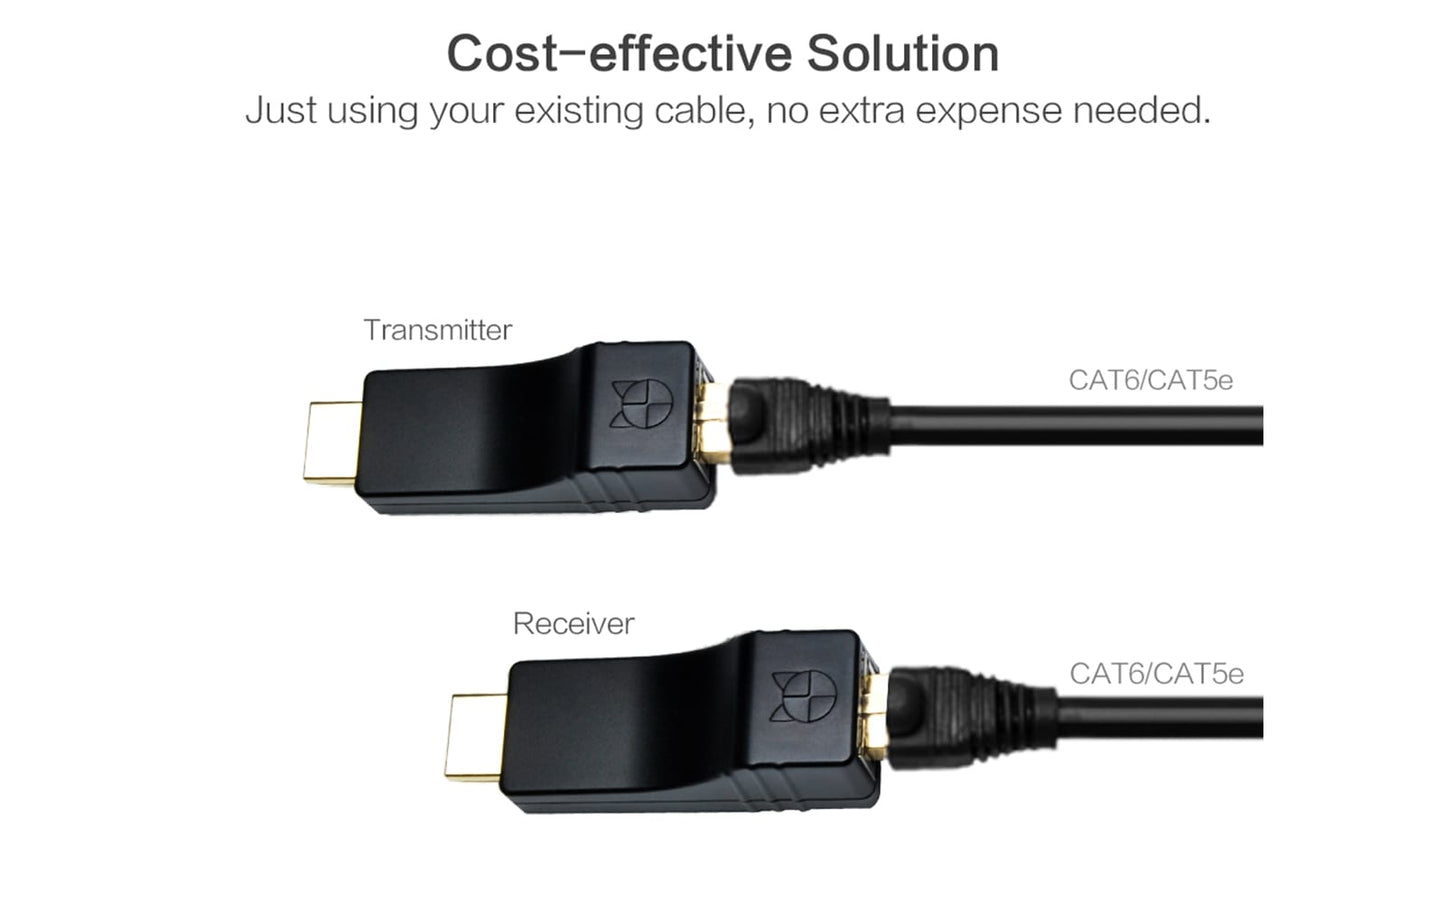 HE-20IR HDMI OVER Cat6 IR Extender Kit-cost effective solution